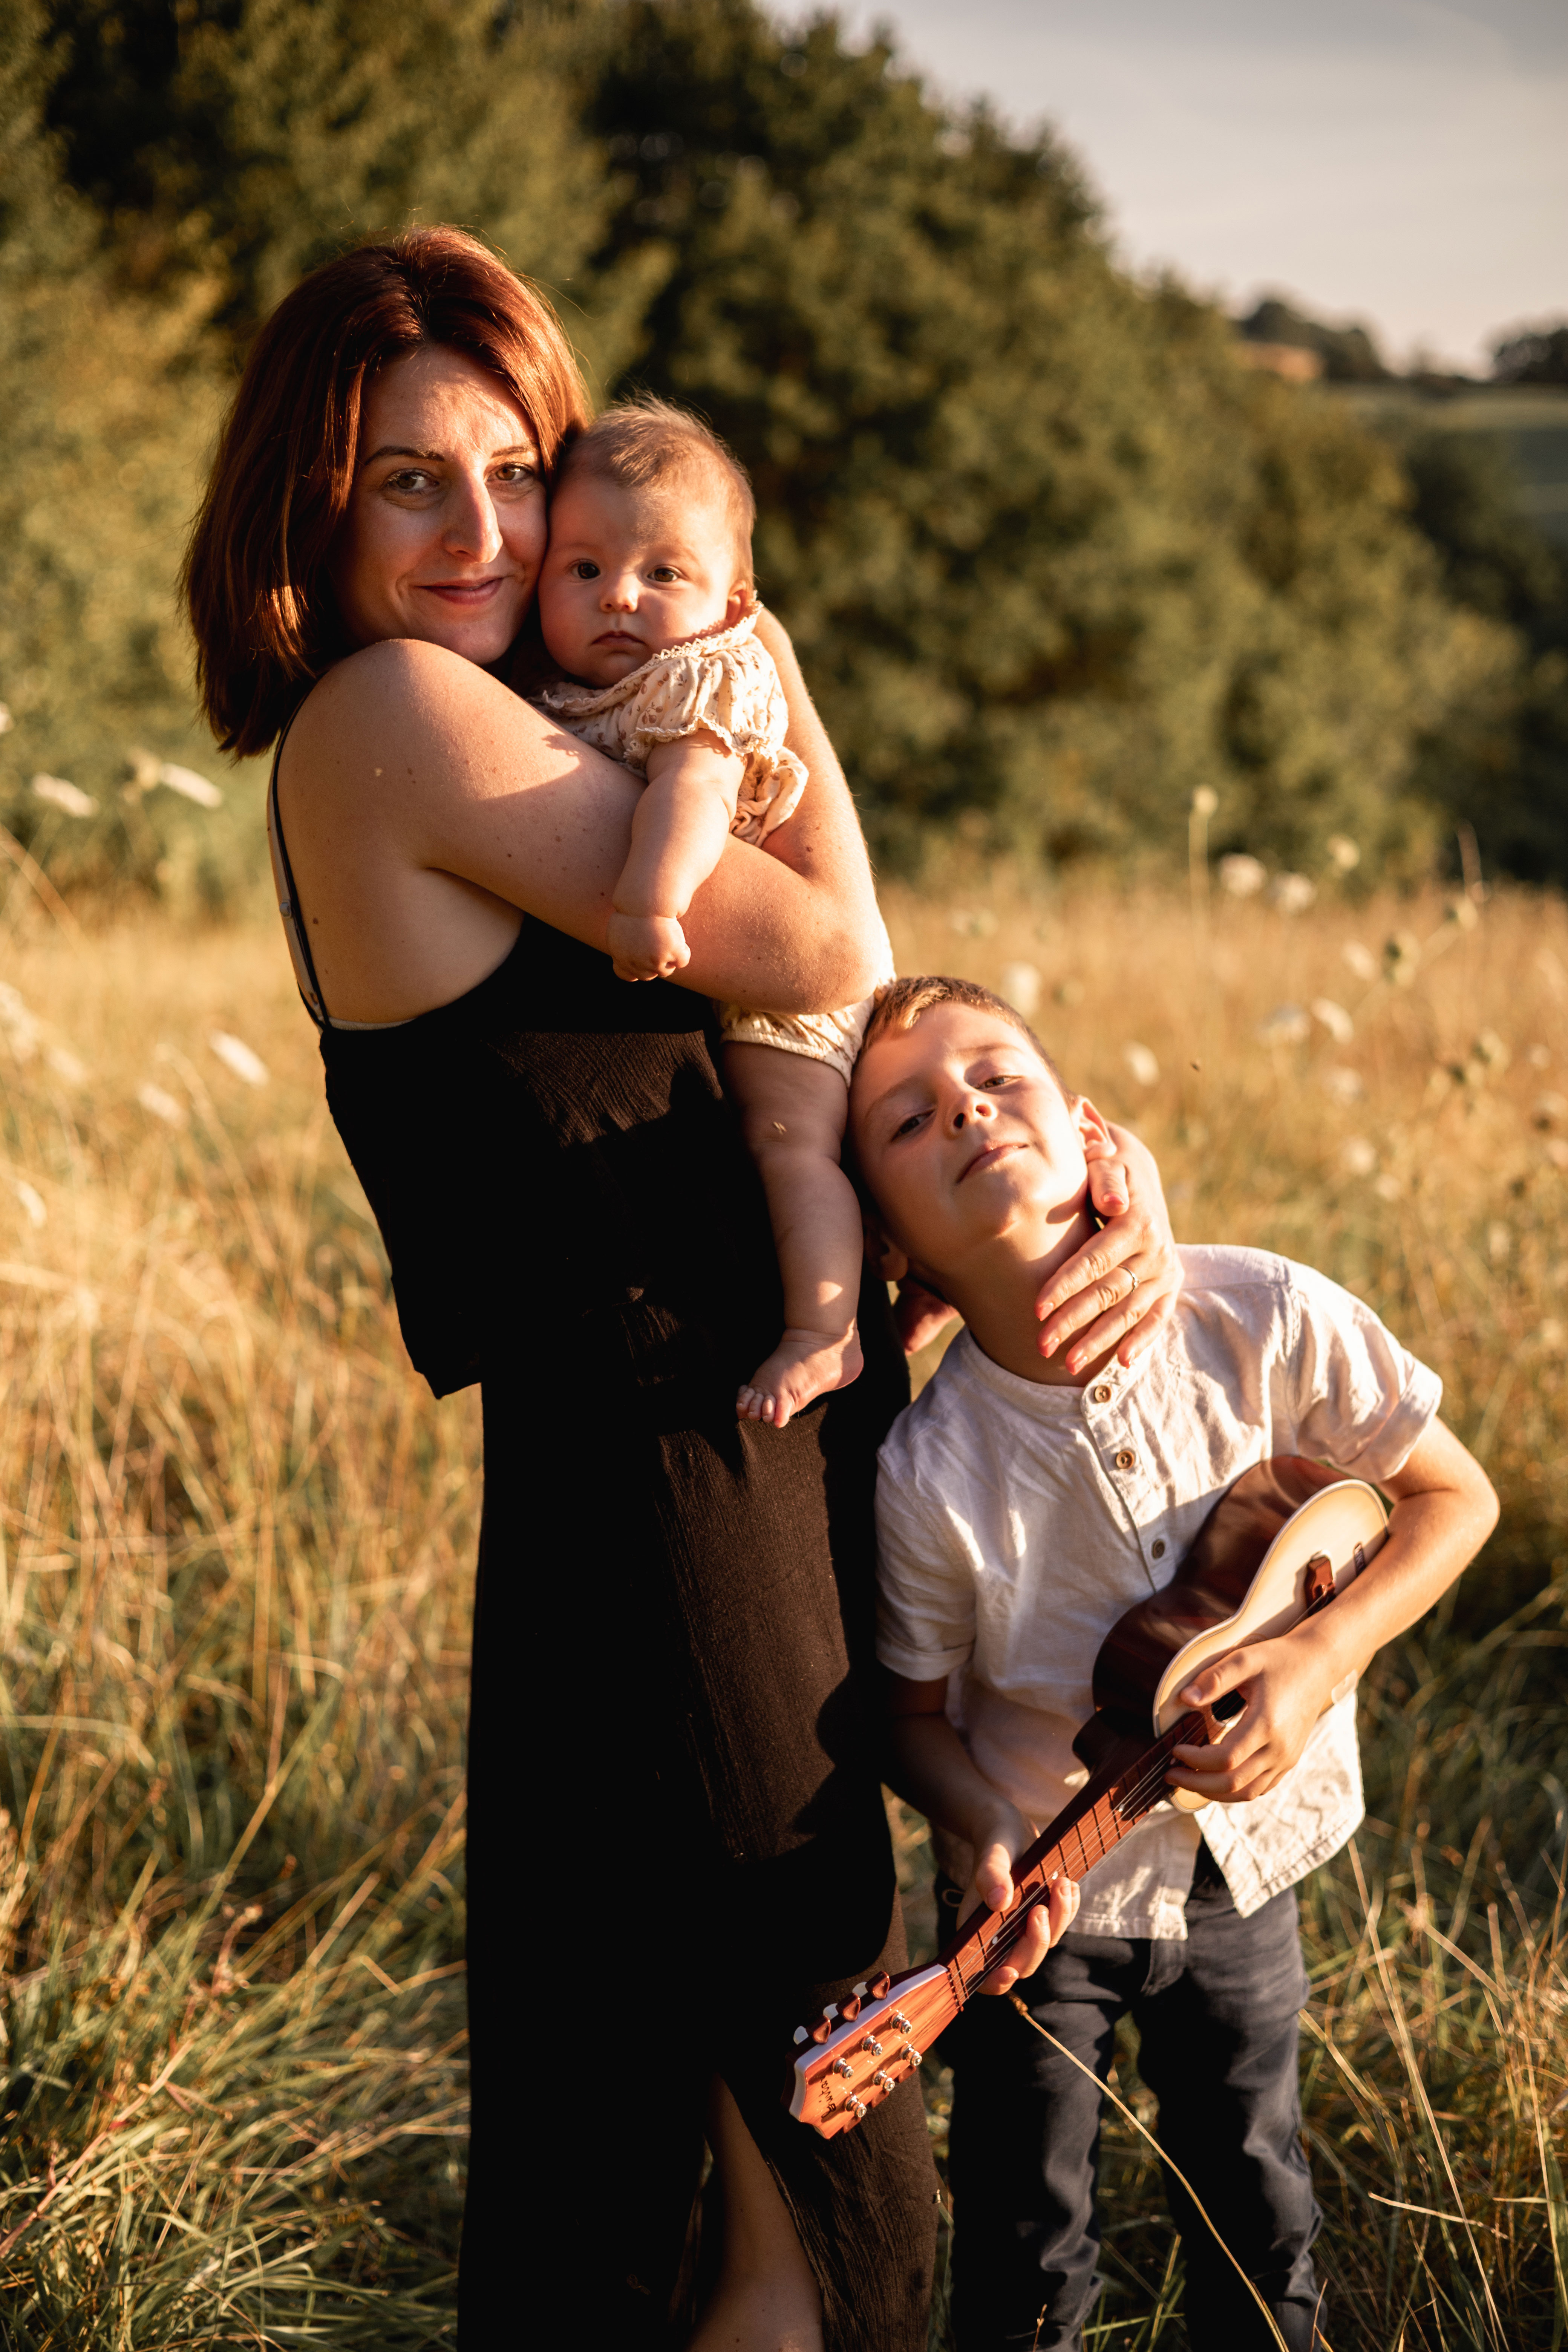 camille manaranche photographe photographe de famille photographe de nouveau-né photographe maternité